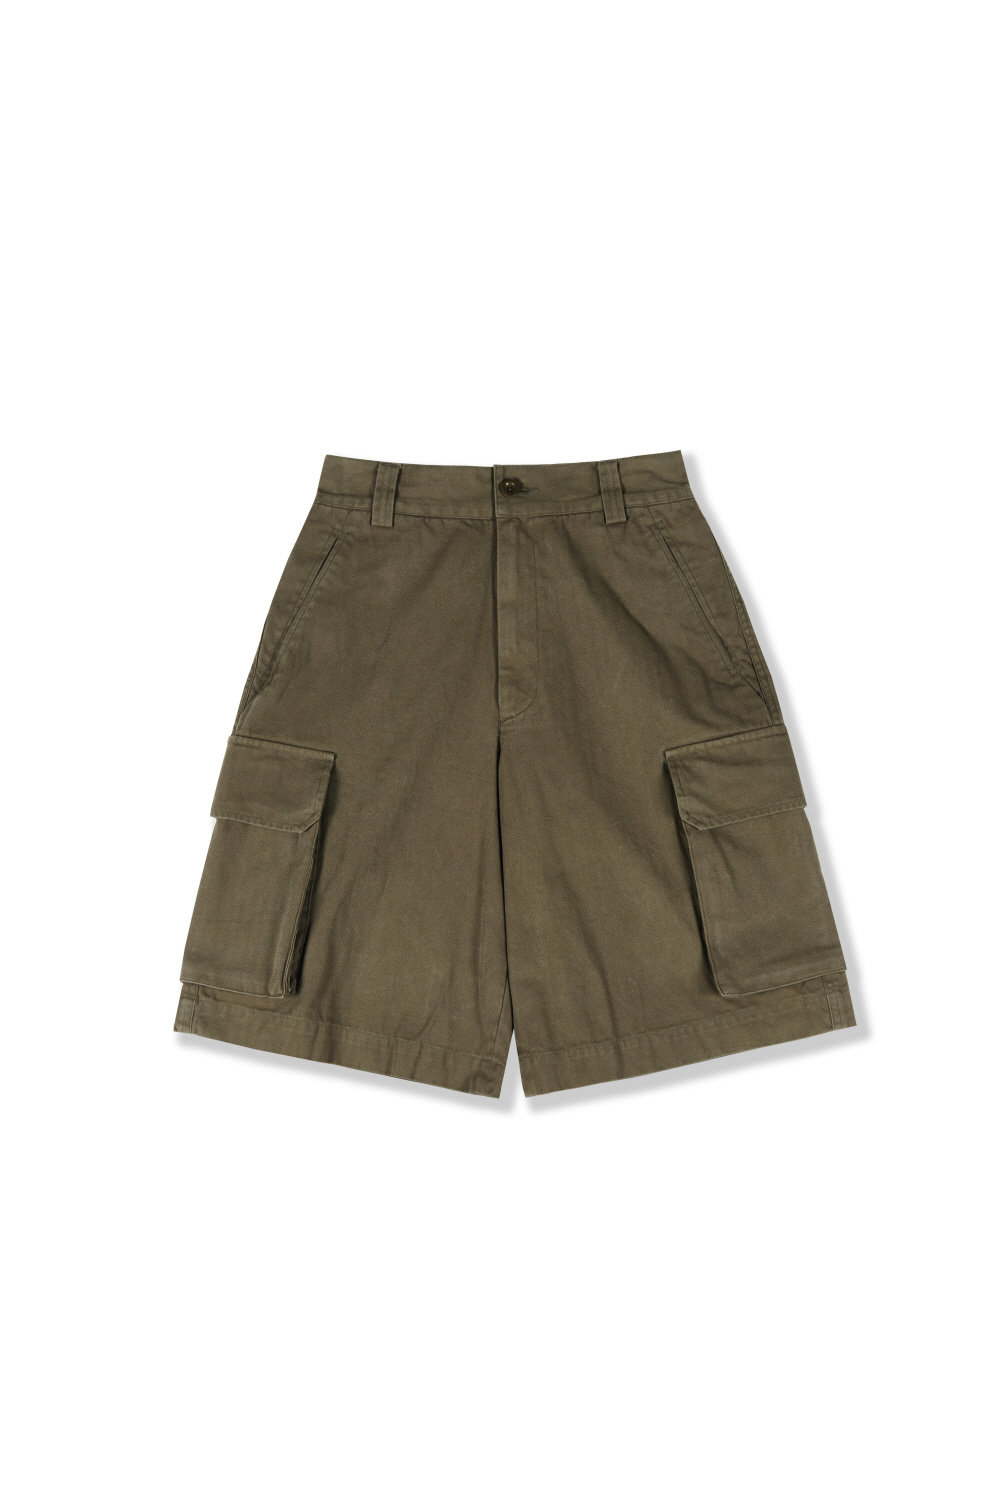 M-47 shorts(HBT)_olive drab